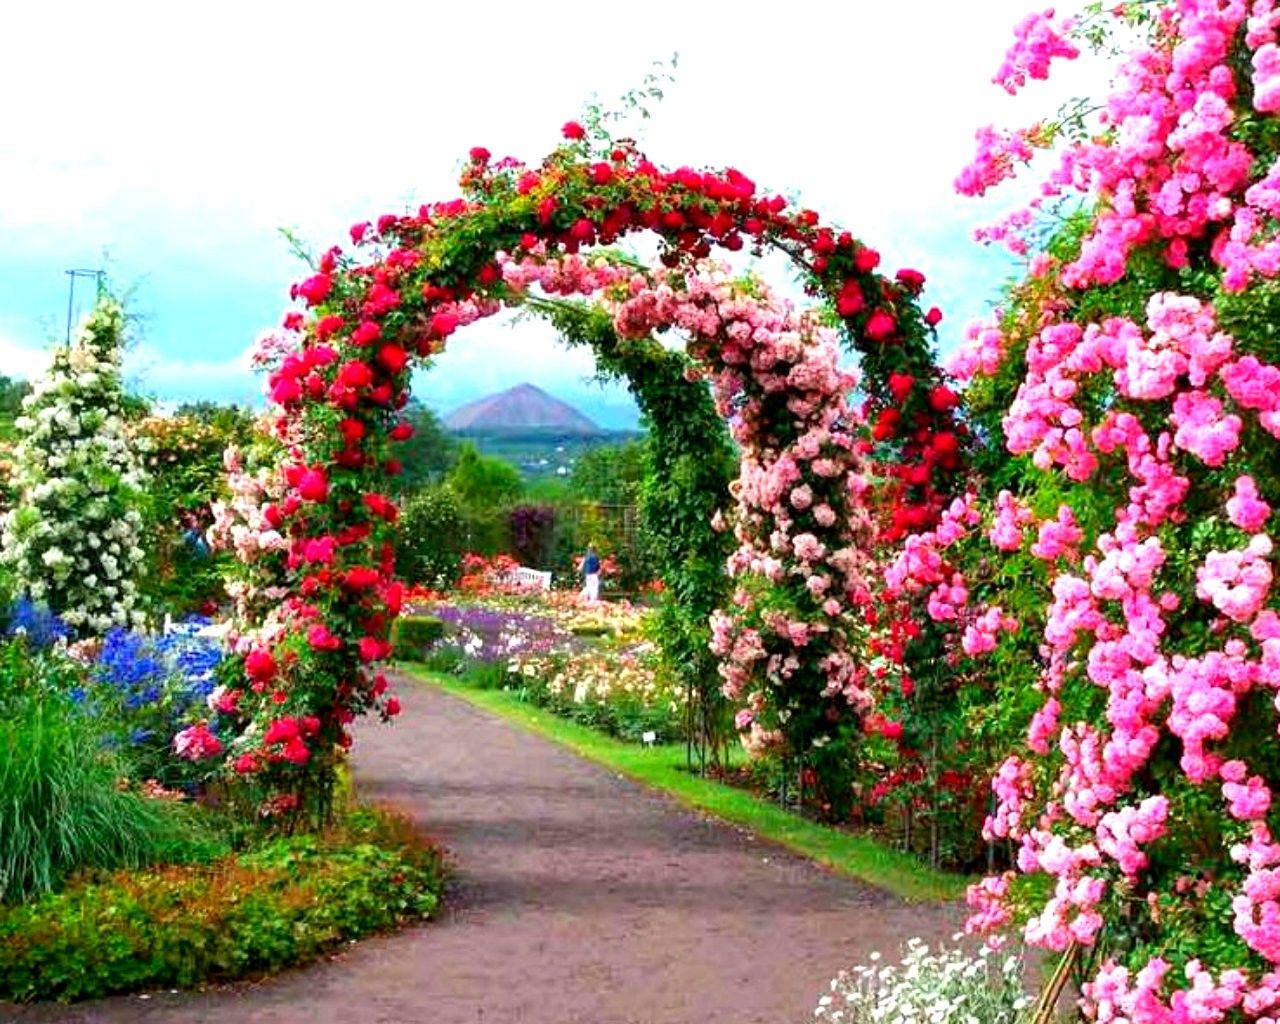 100000 Best Flower Garden Images  Wallpapers  100 Free Download   Pexels  Free Stock Photos